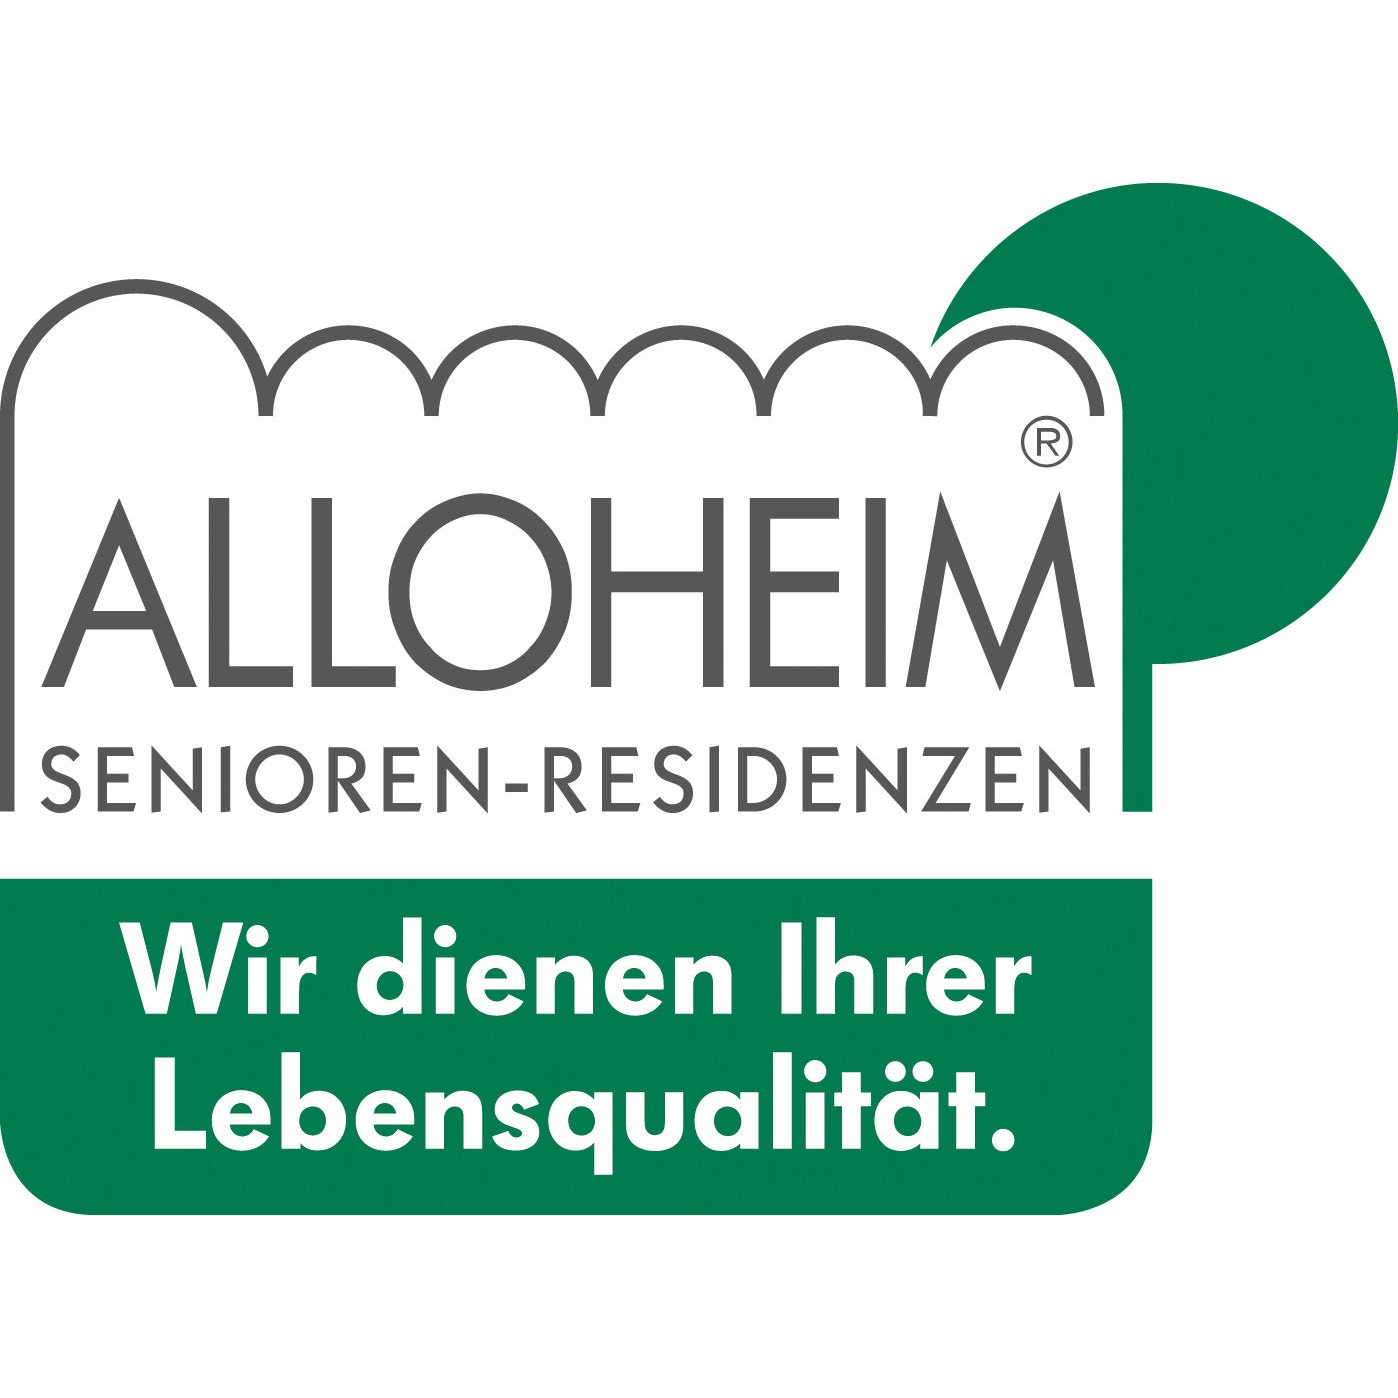 Alloheim Senioren-Residenz "Leonardis" Logo